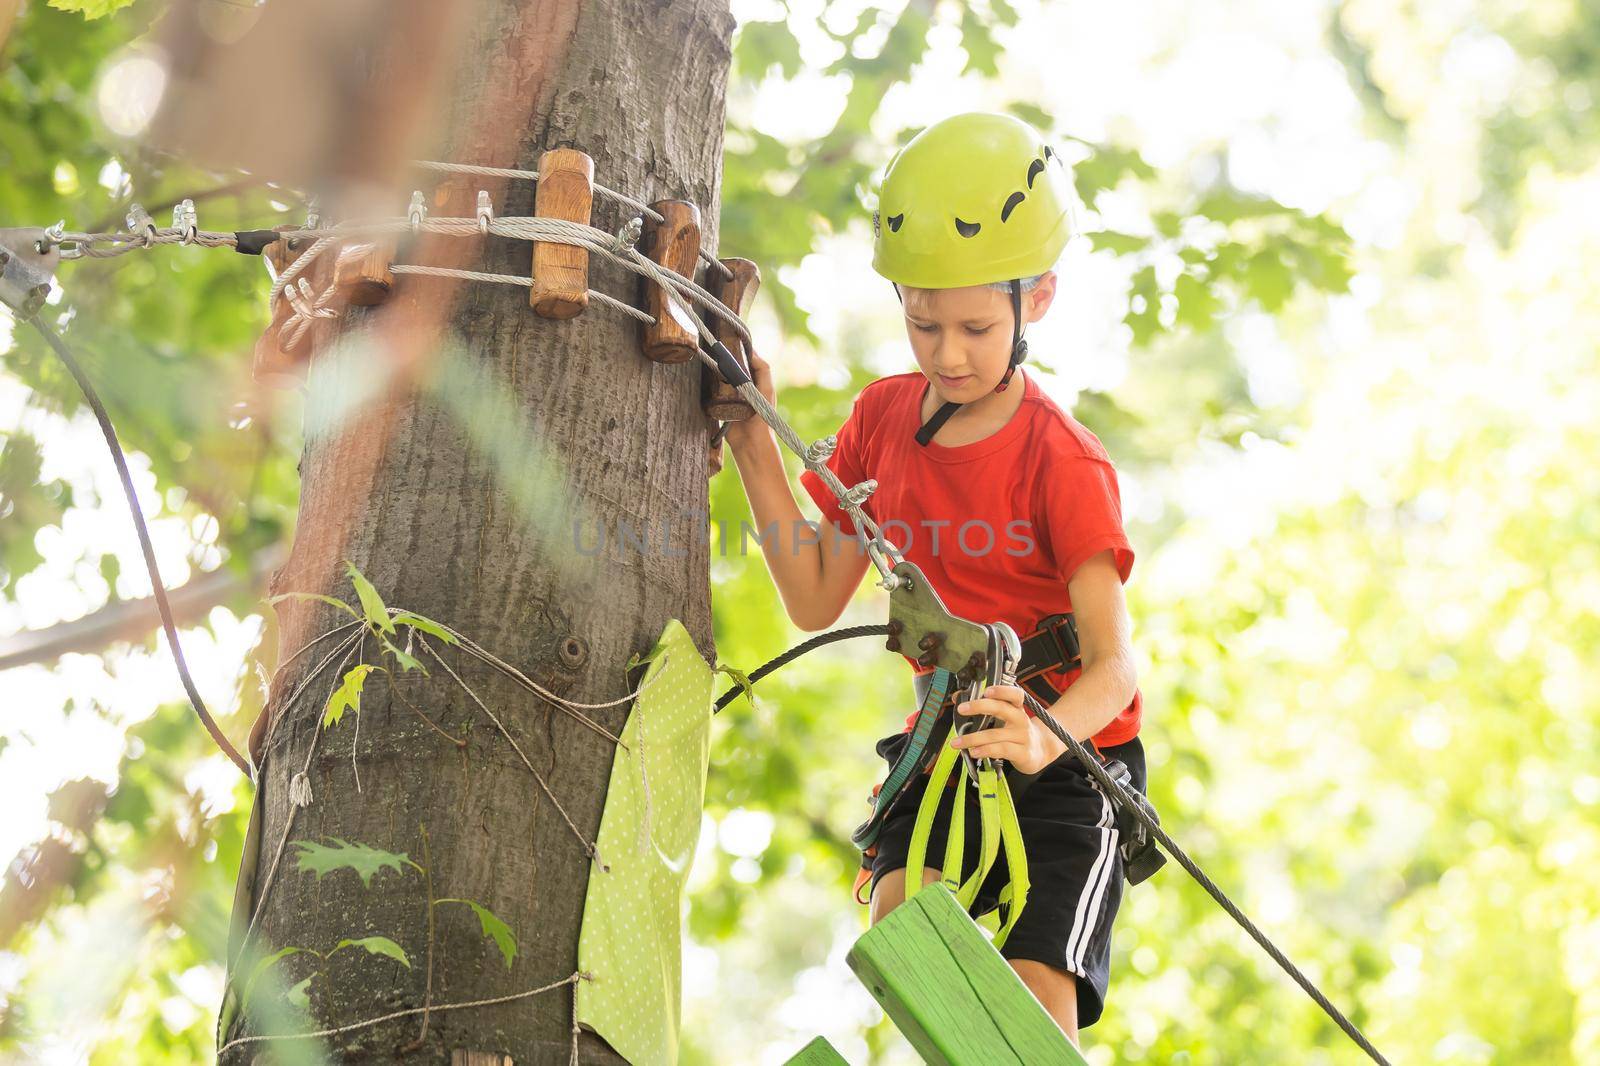 Cute school boy enjoying a sunny day in a climbing adventure activity park.